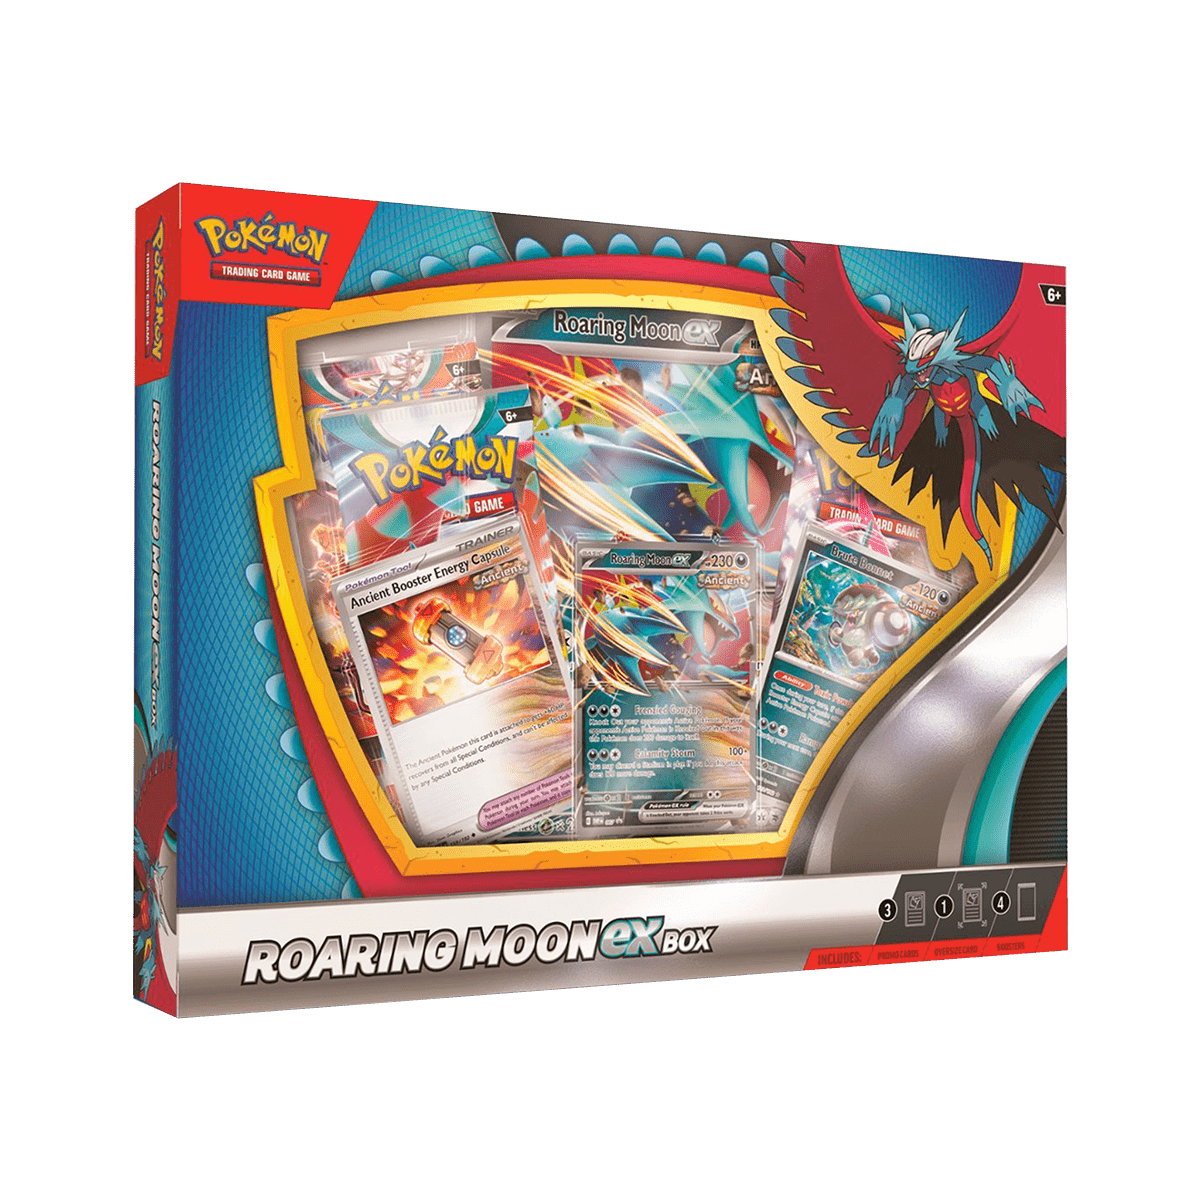 Pokémon TCG - Iron Valiant / Roaring Moon ex Box - Cardmaniac.ch